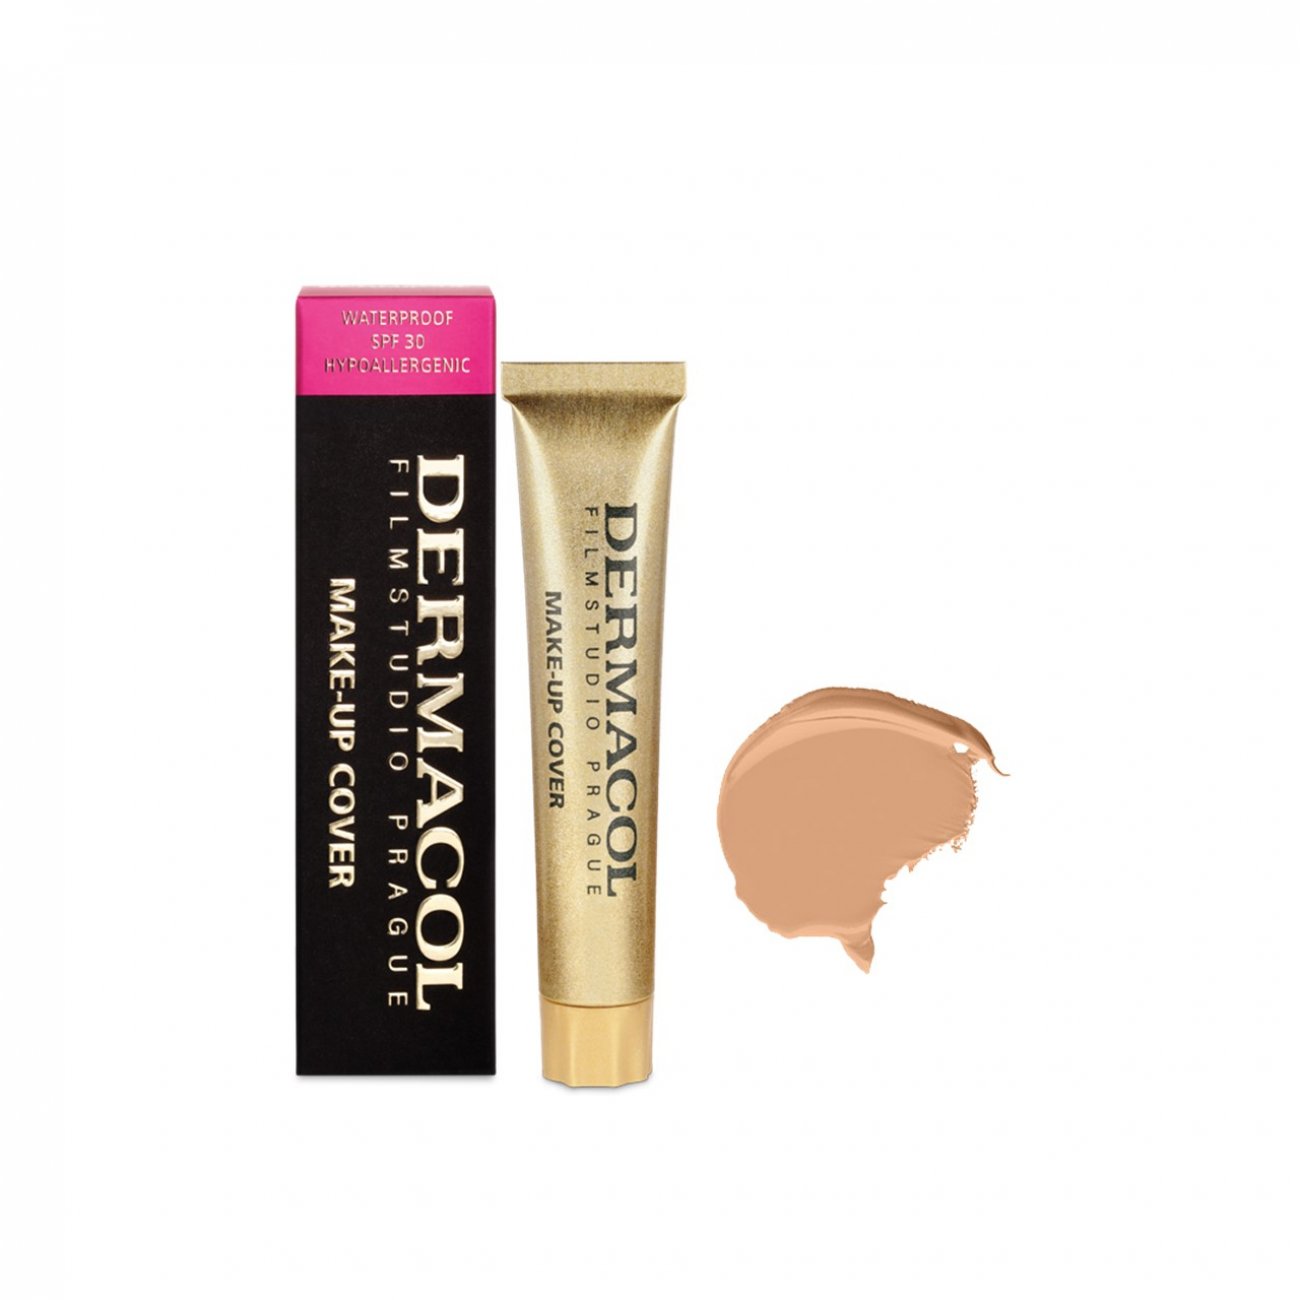 Buy Dermacol Make-Up Cover Foundation 222 30g ·